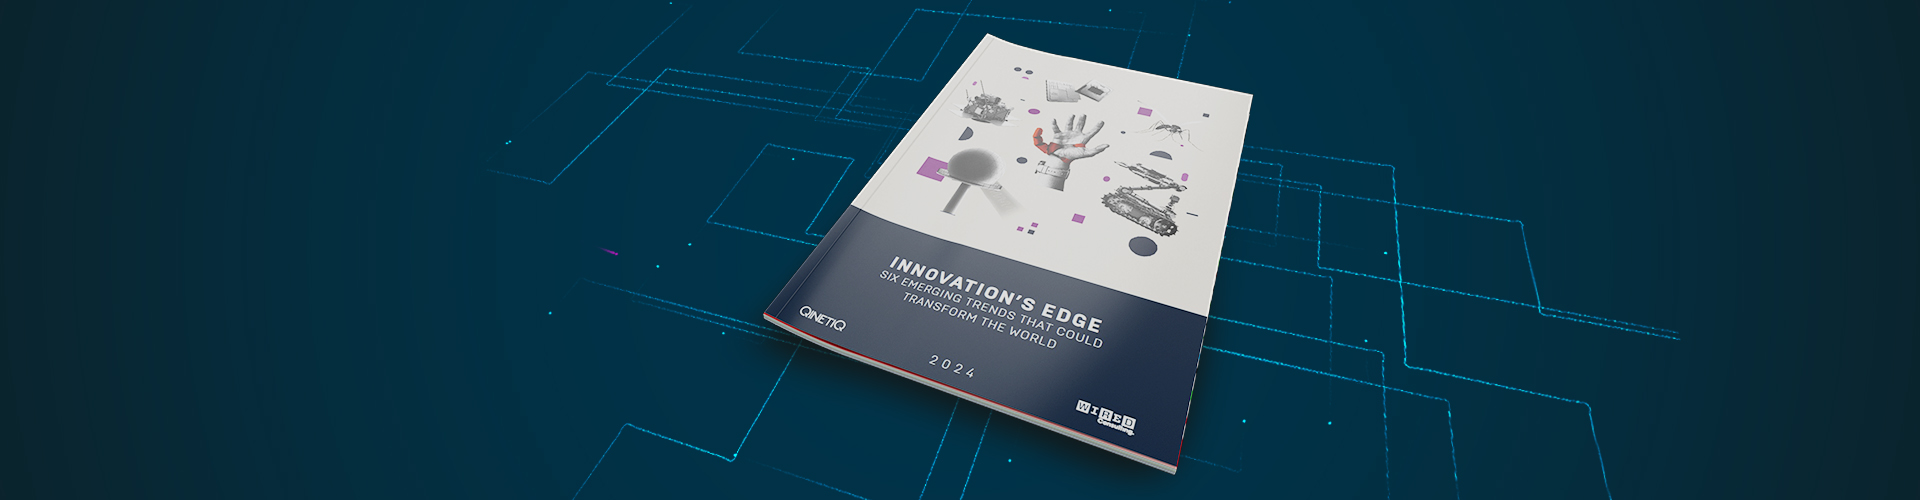 Innovation's Edge report